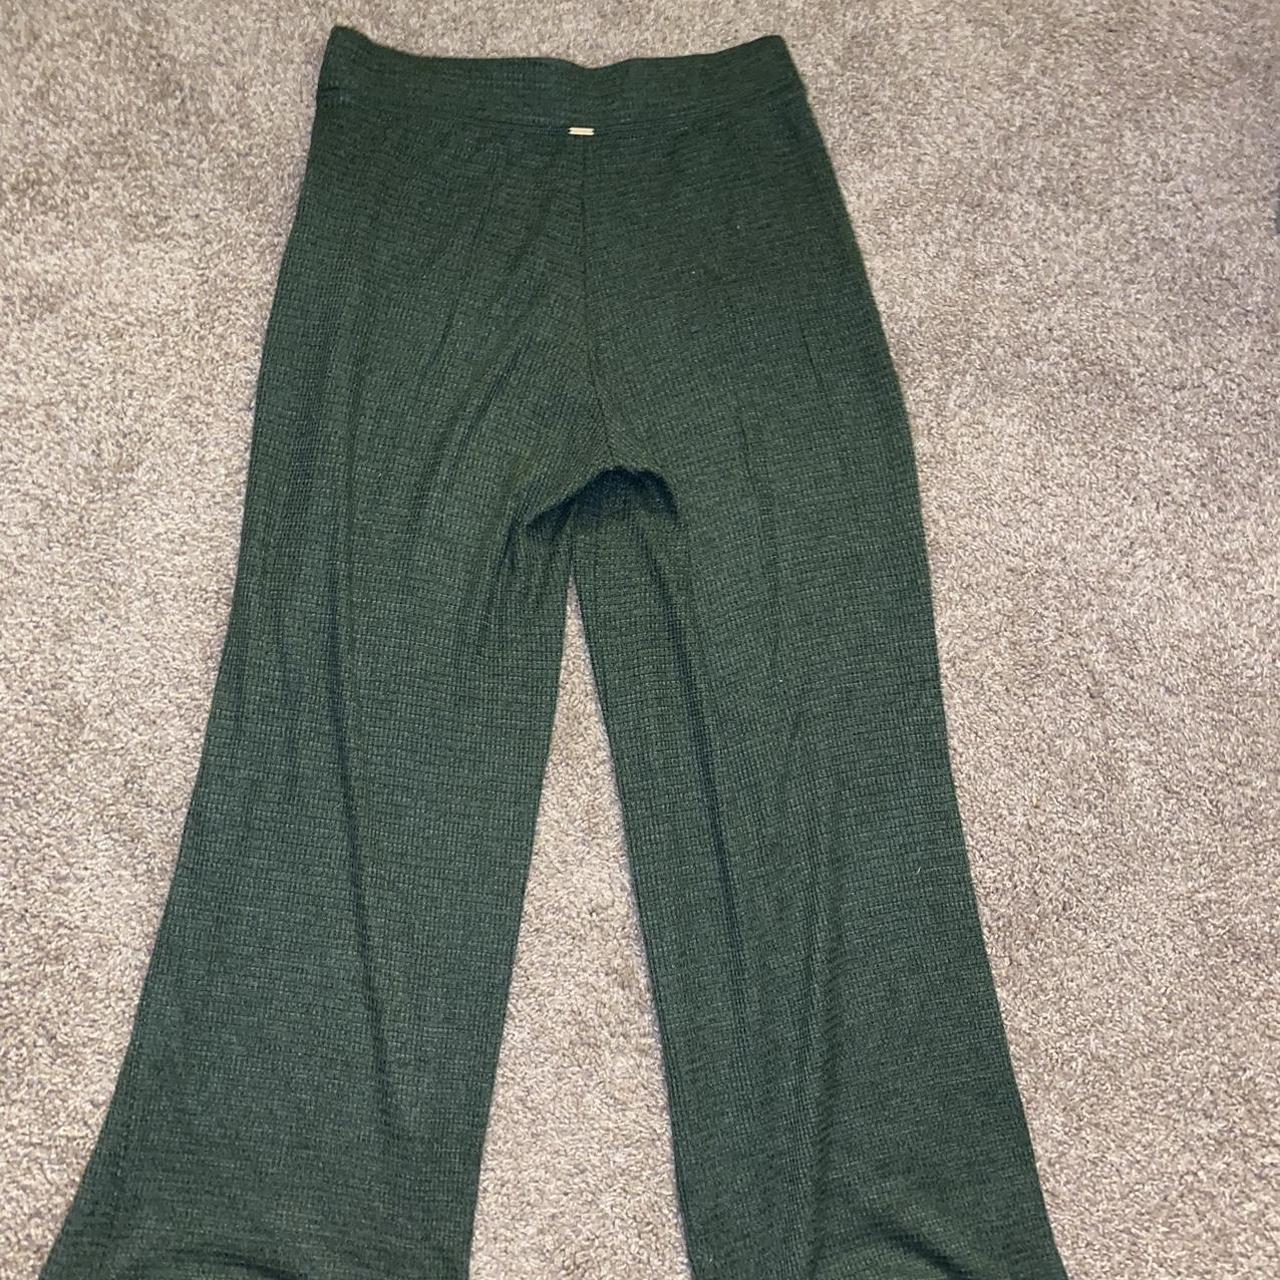 Gilly Hicks Women's Green Trousers | Depop